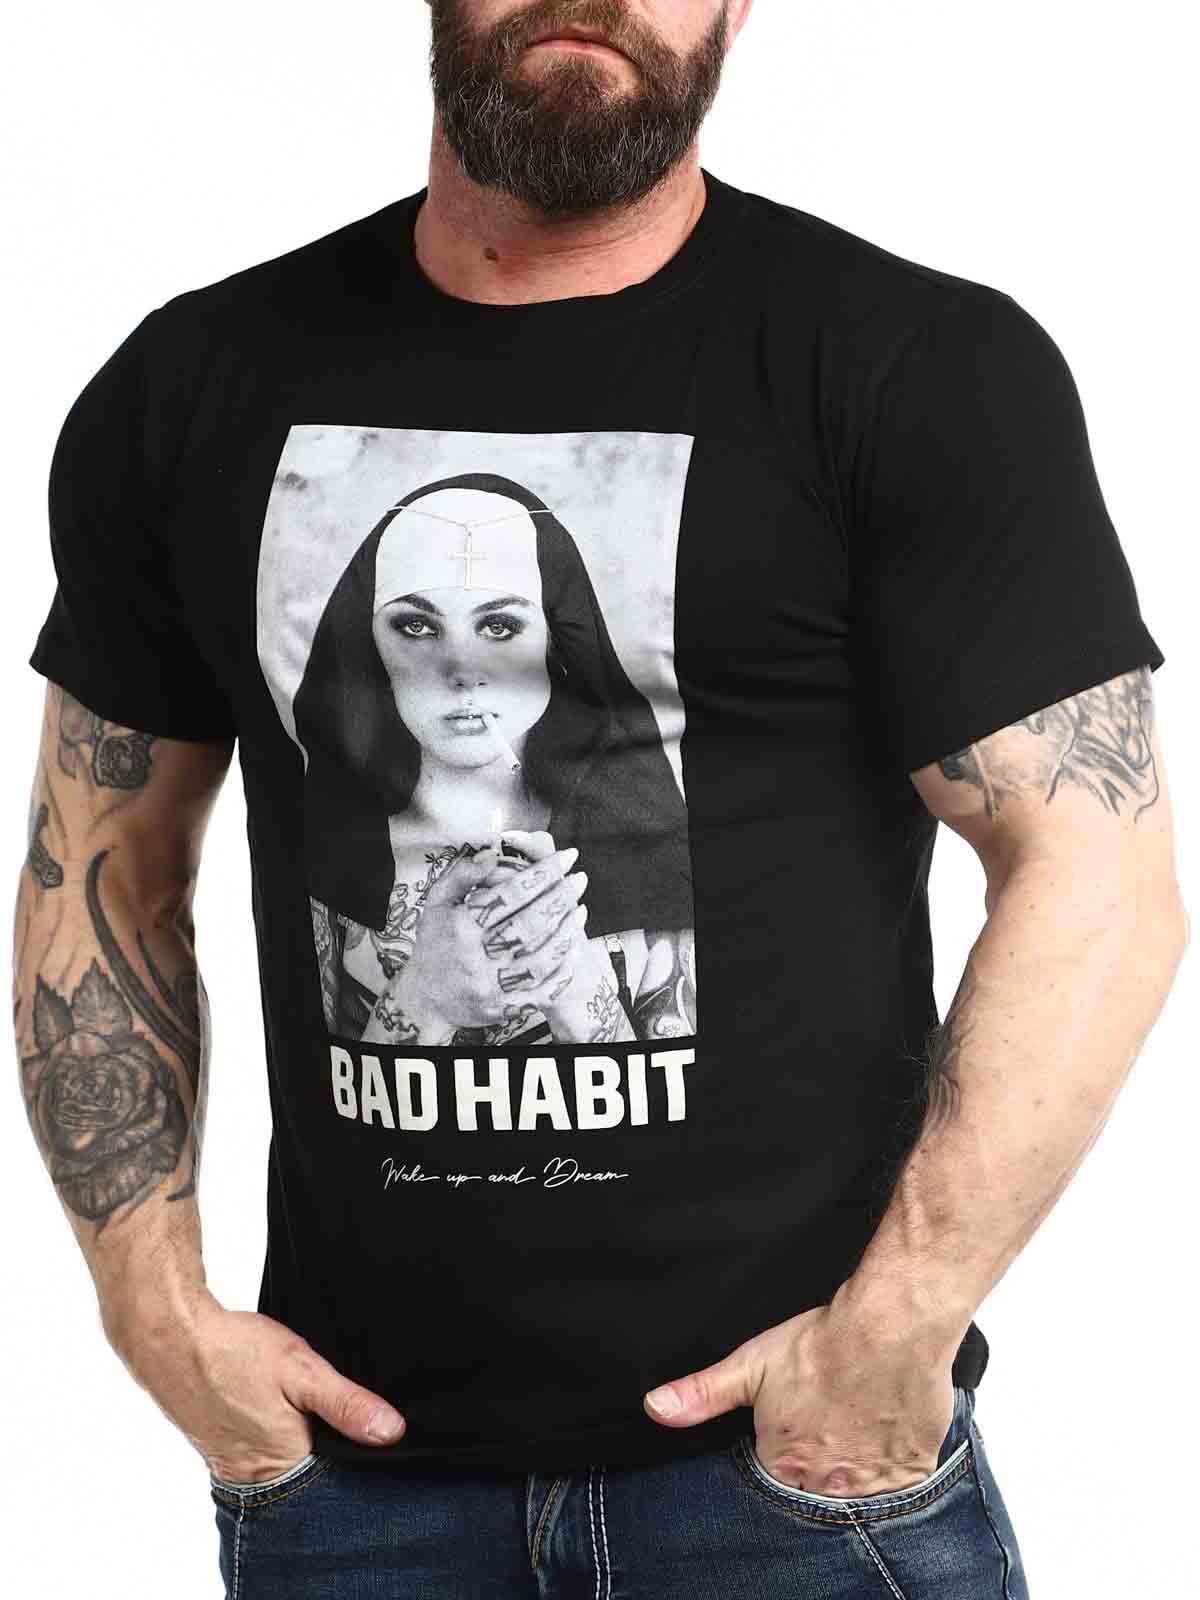 Bad-habbit-tshirt_3.jpg